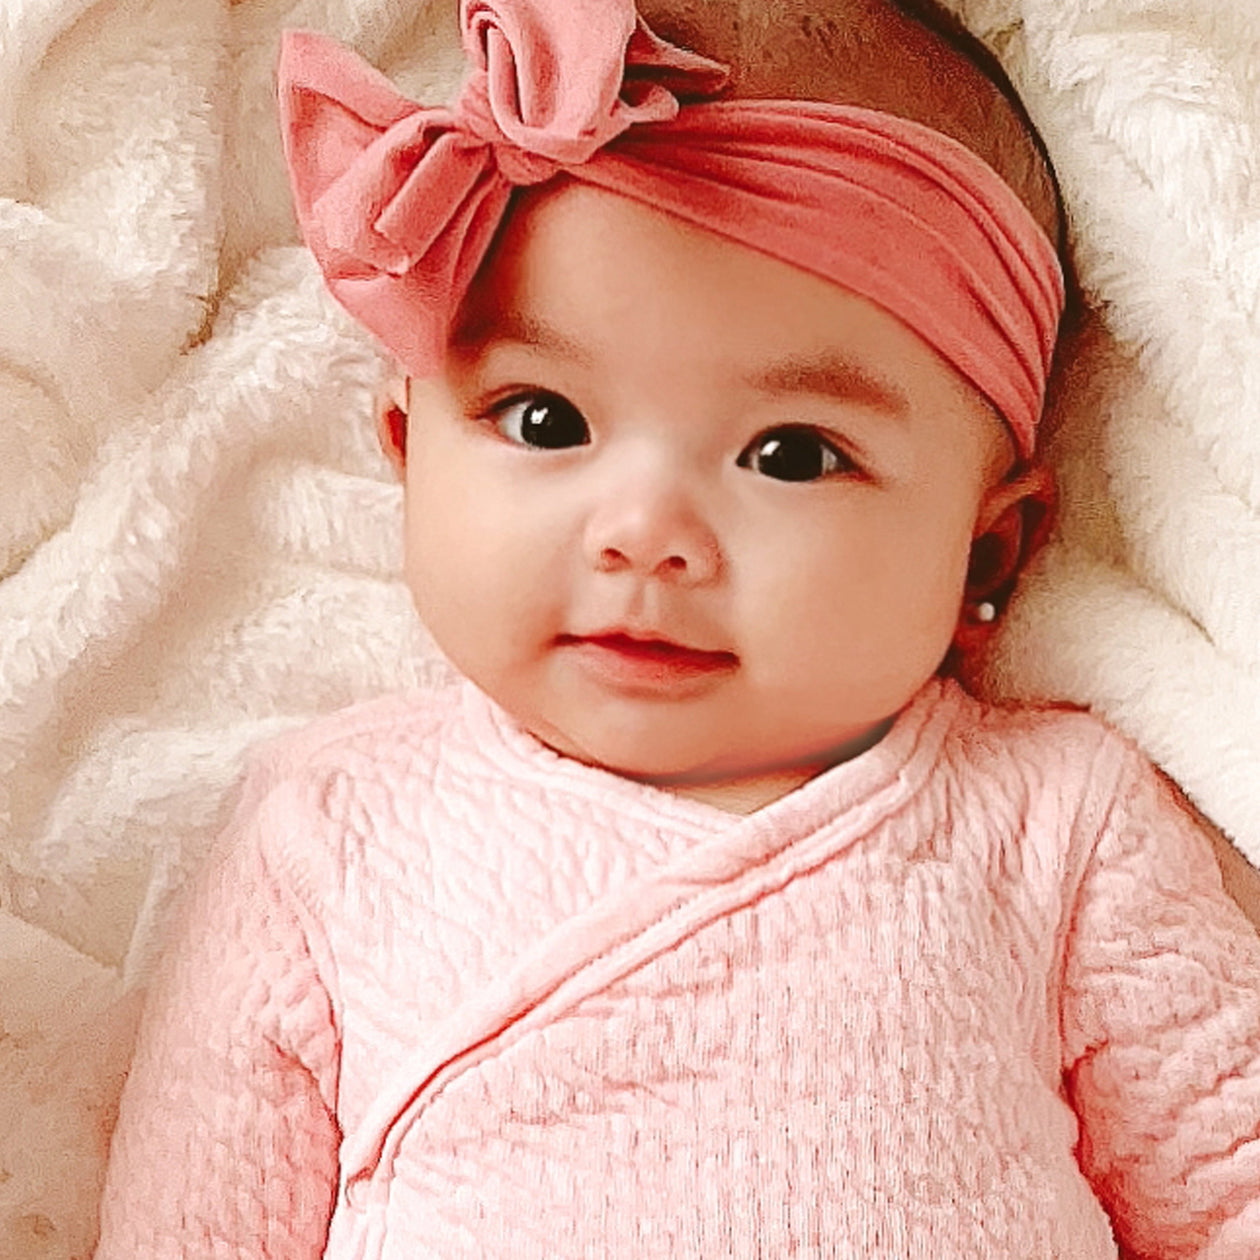 Honest Baby Clothing - Newborn - 6 Months Organic Cotton Take Me